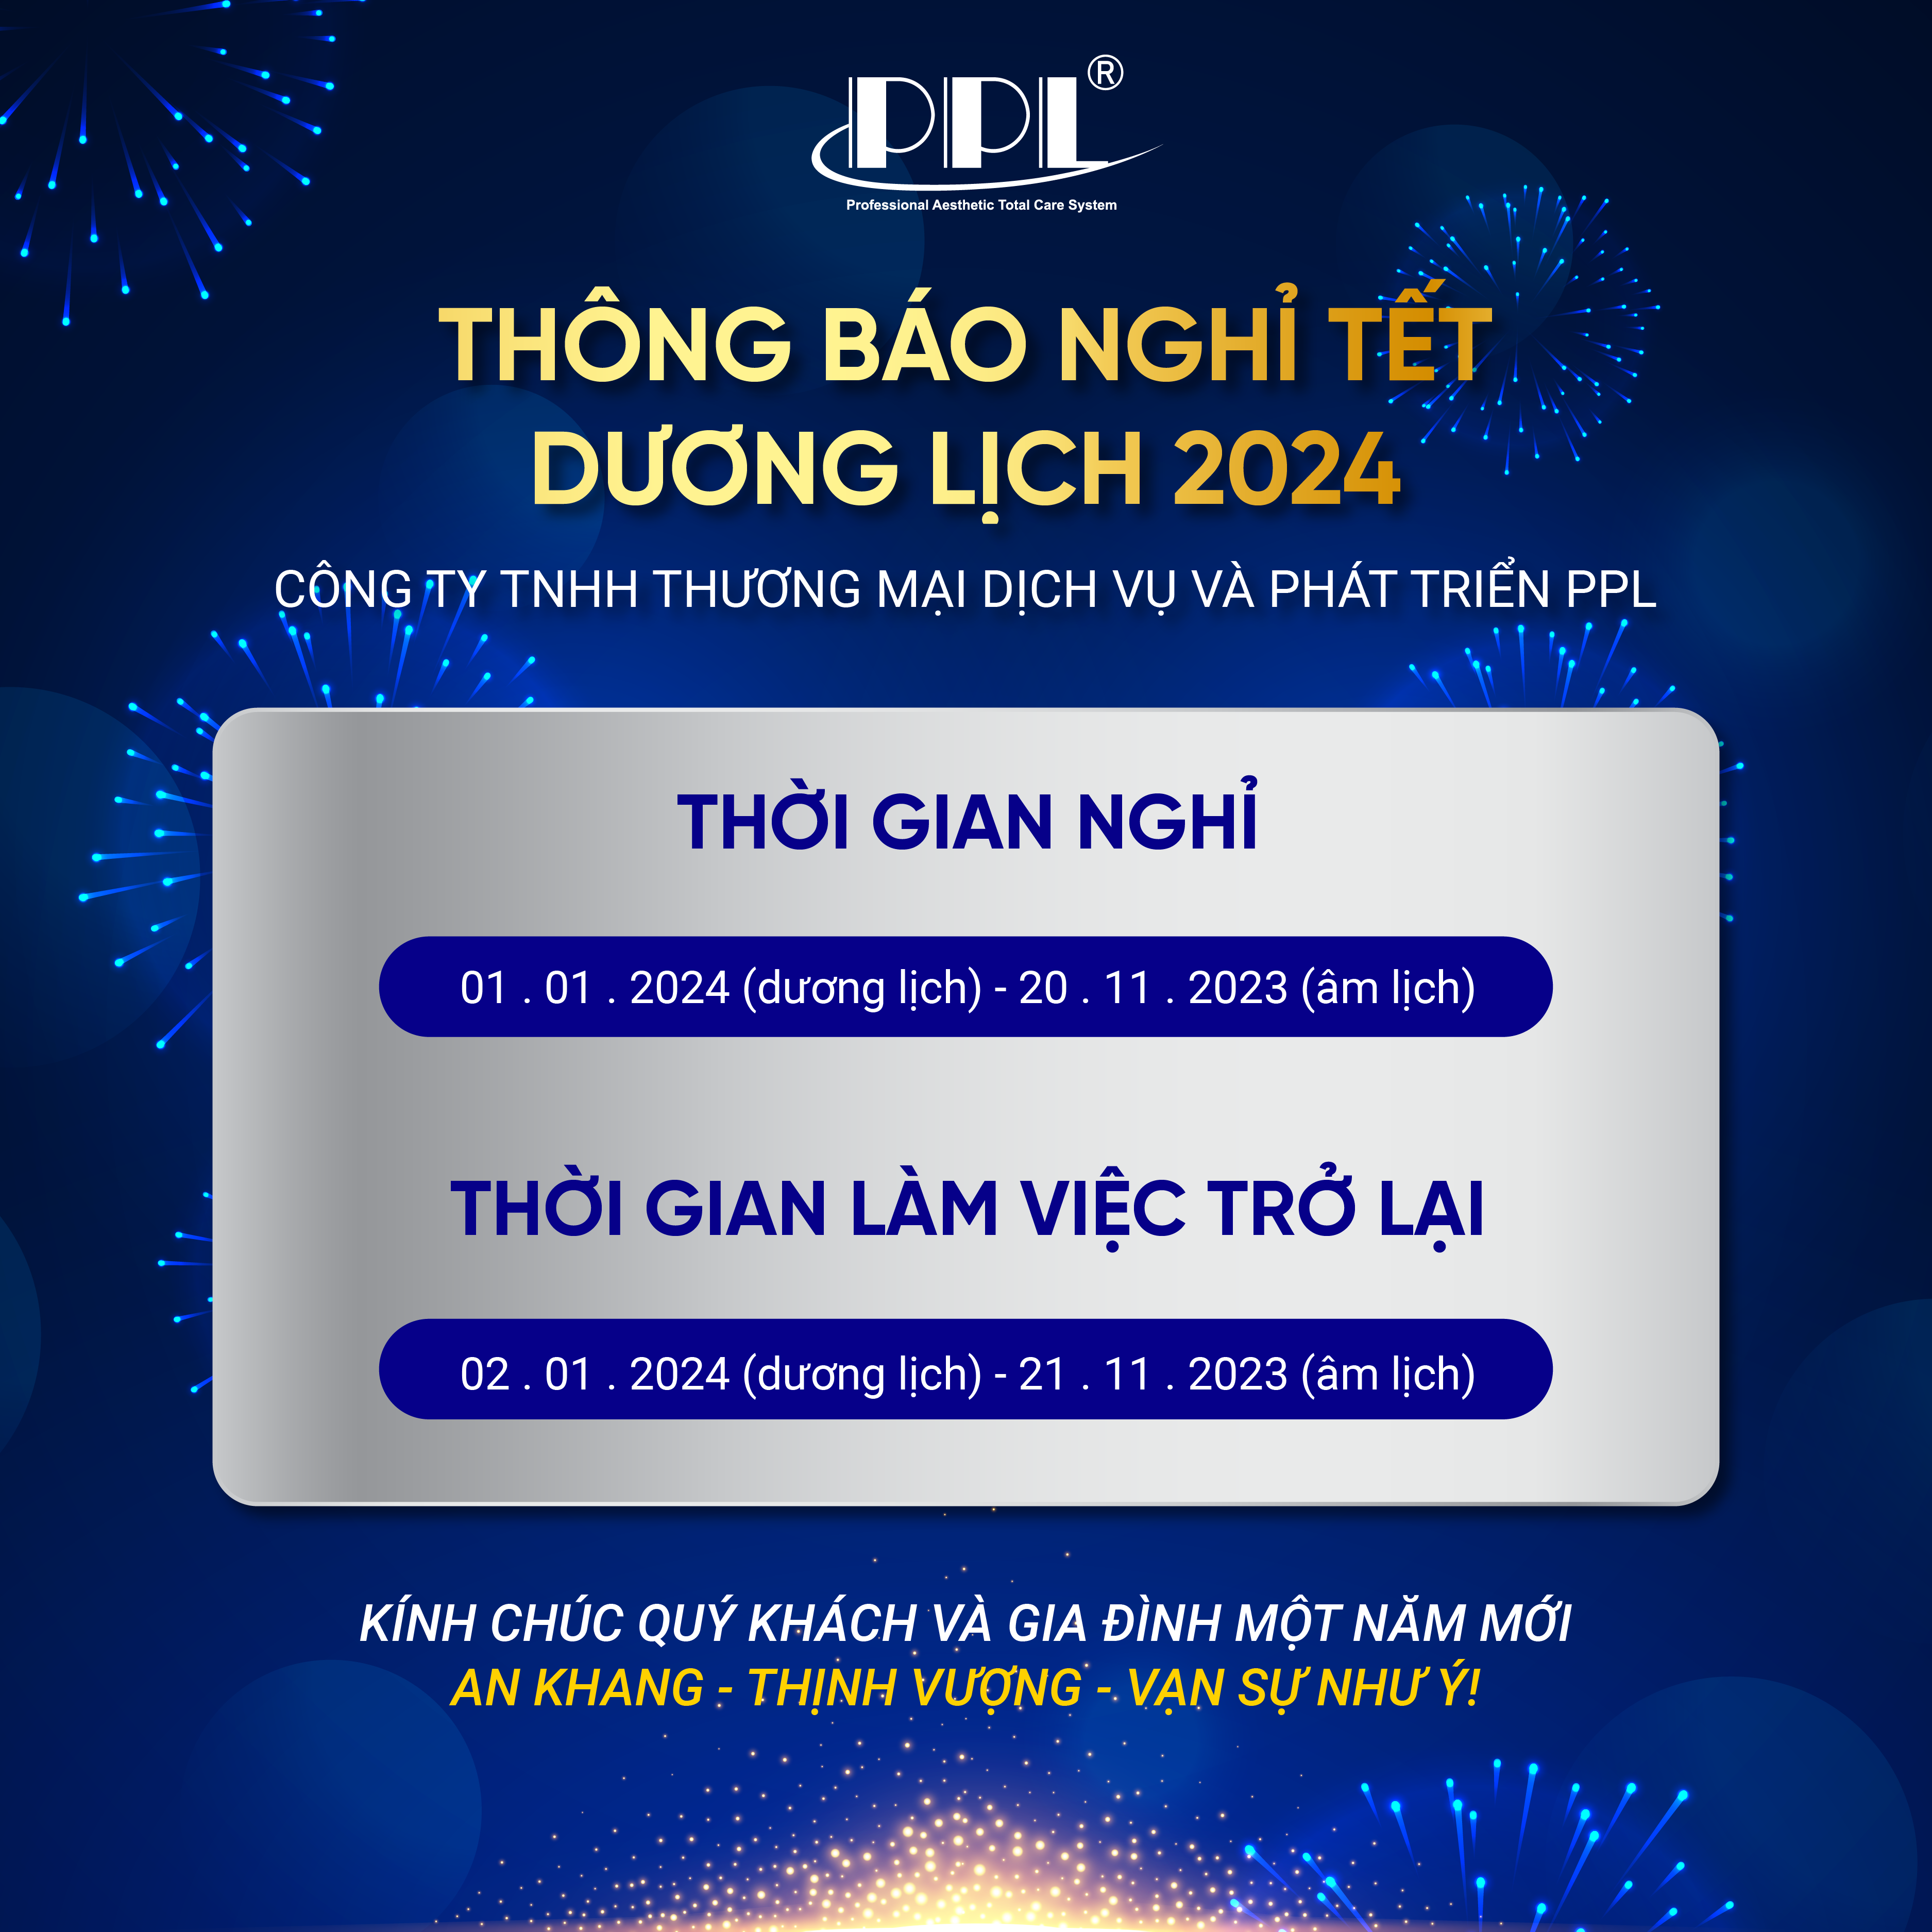 THONG BAO NGHI TET 2024